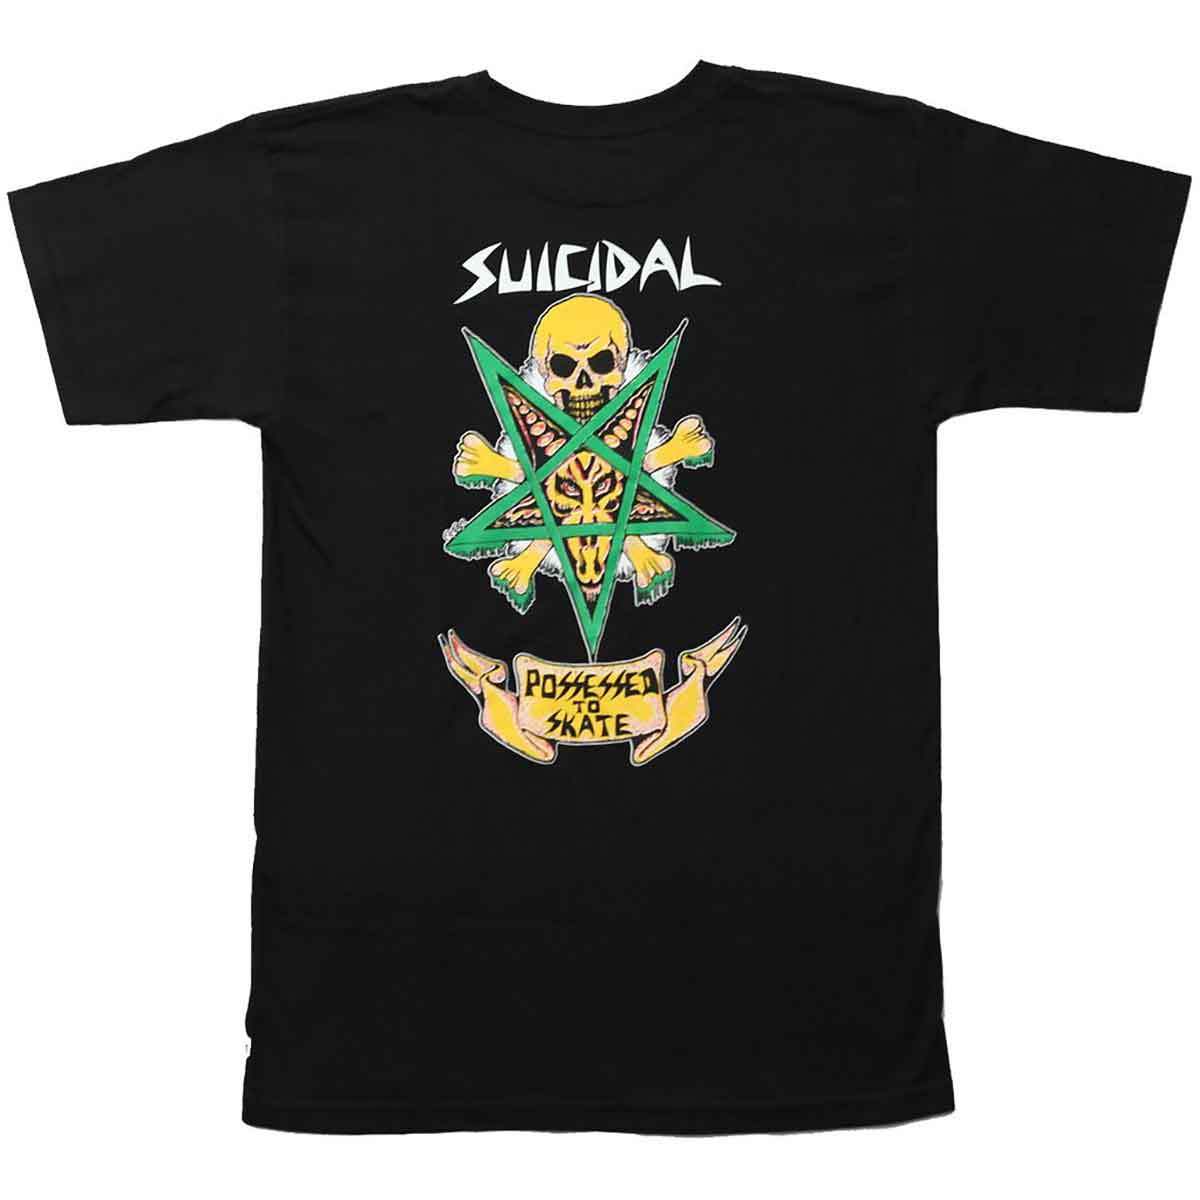 Suicidal Skates Possessed to Skate T-Shirt - Black Size:Large